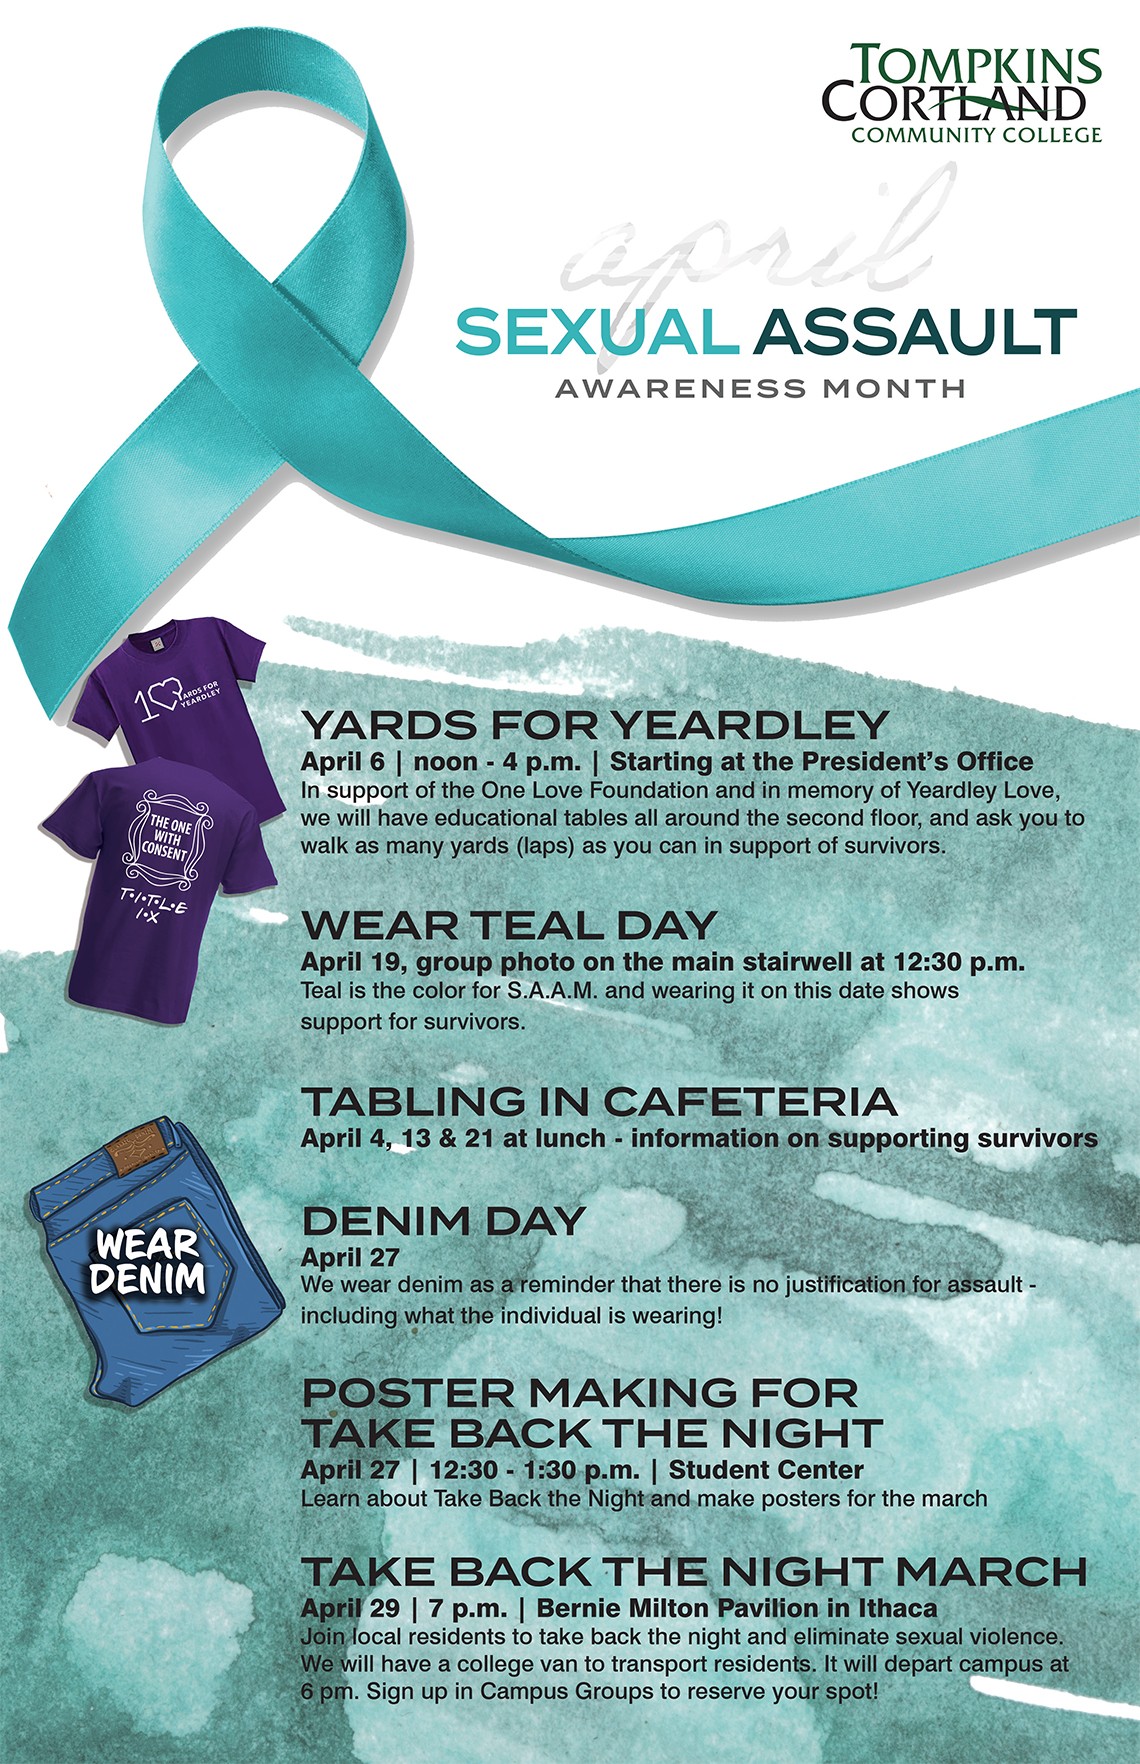 Poster promoting Sexual Assault Awareness events